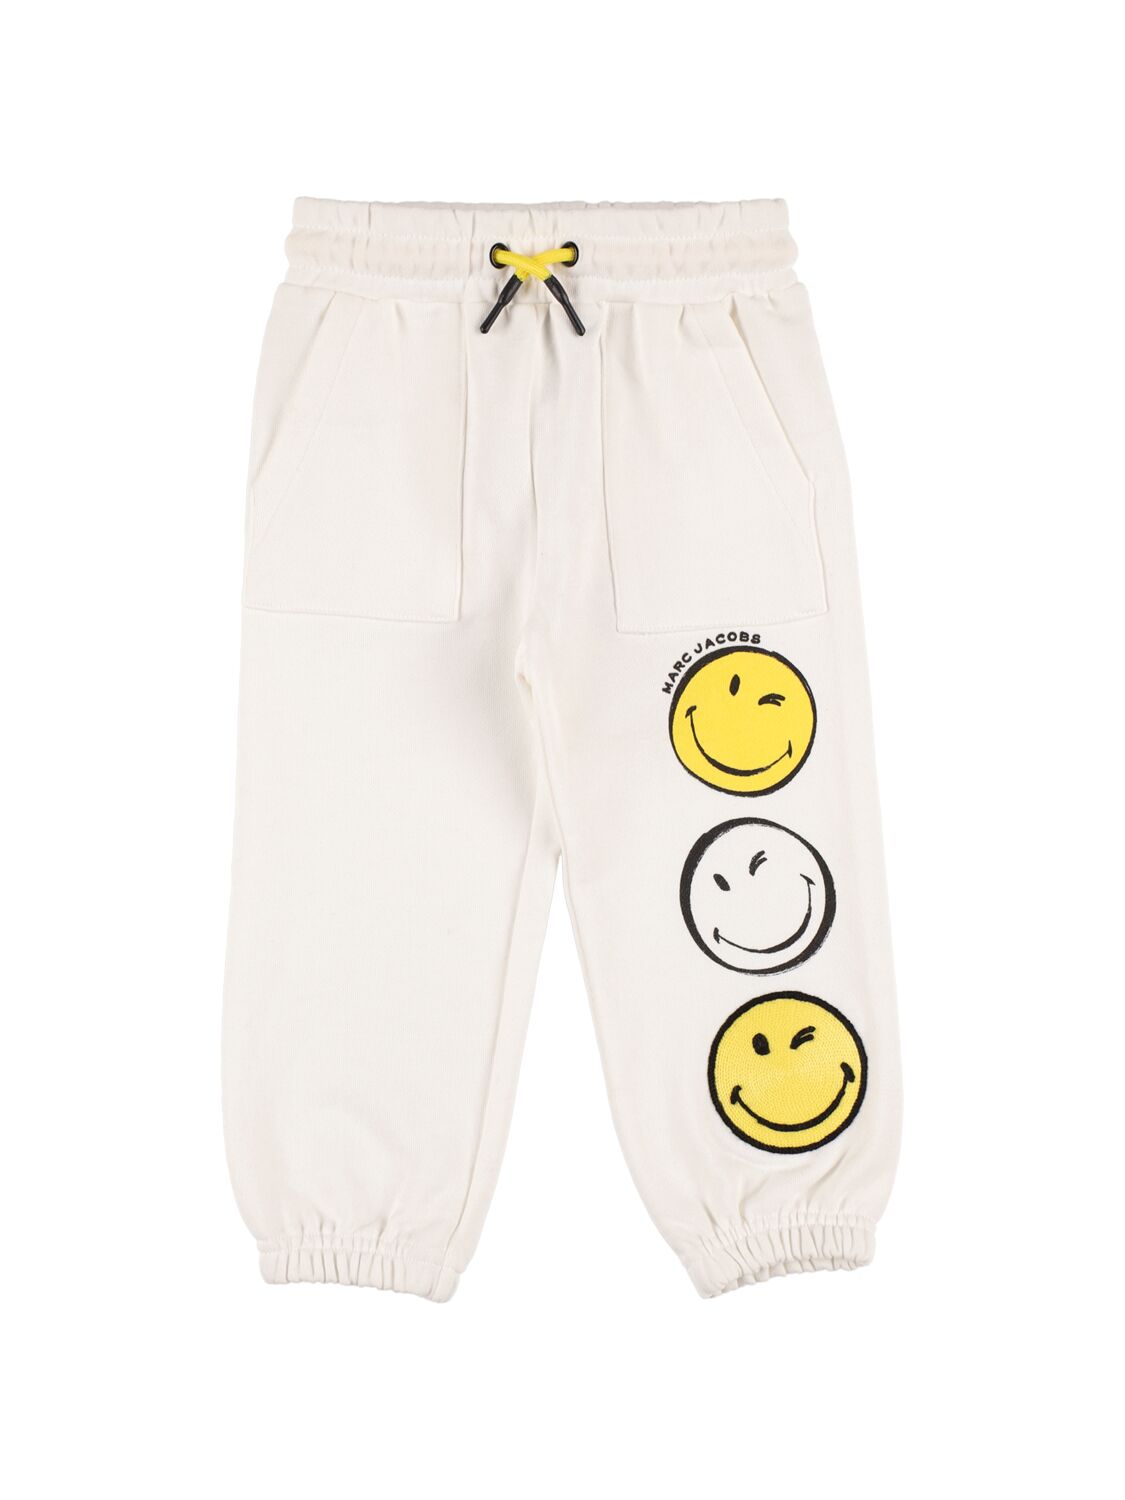 Smileyworld Cotton Sweatpants